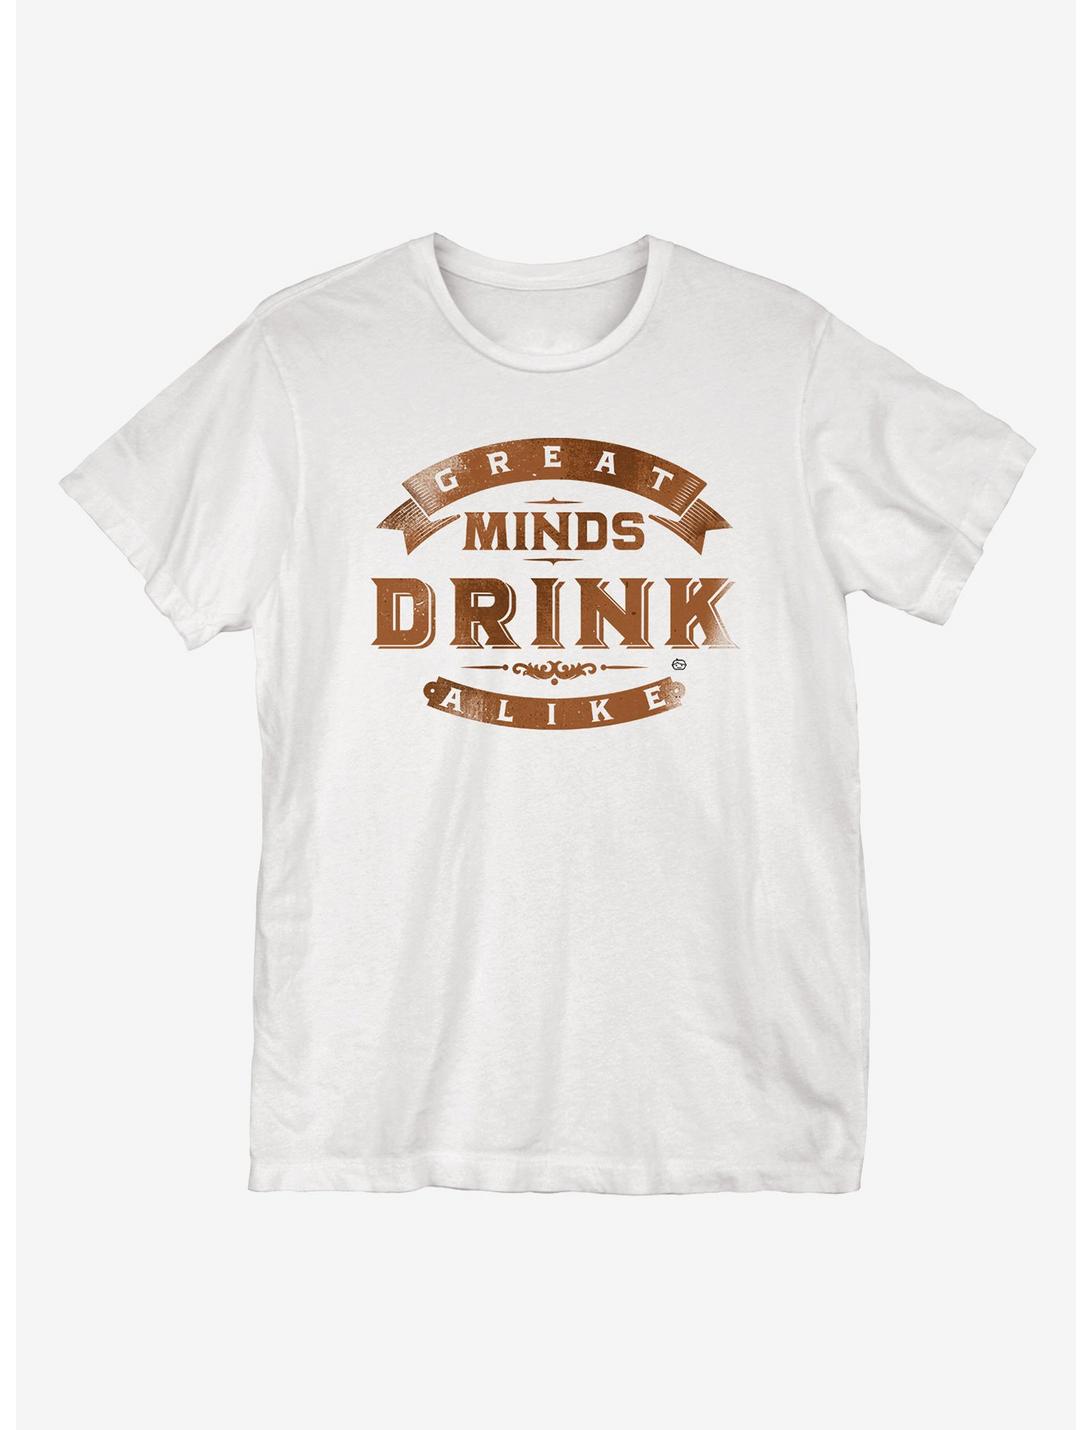 Plus Size Drink Alike T-Shirt, WHITE, hi-res